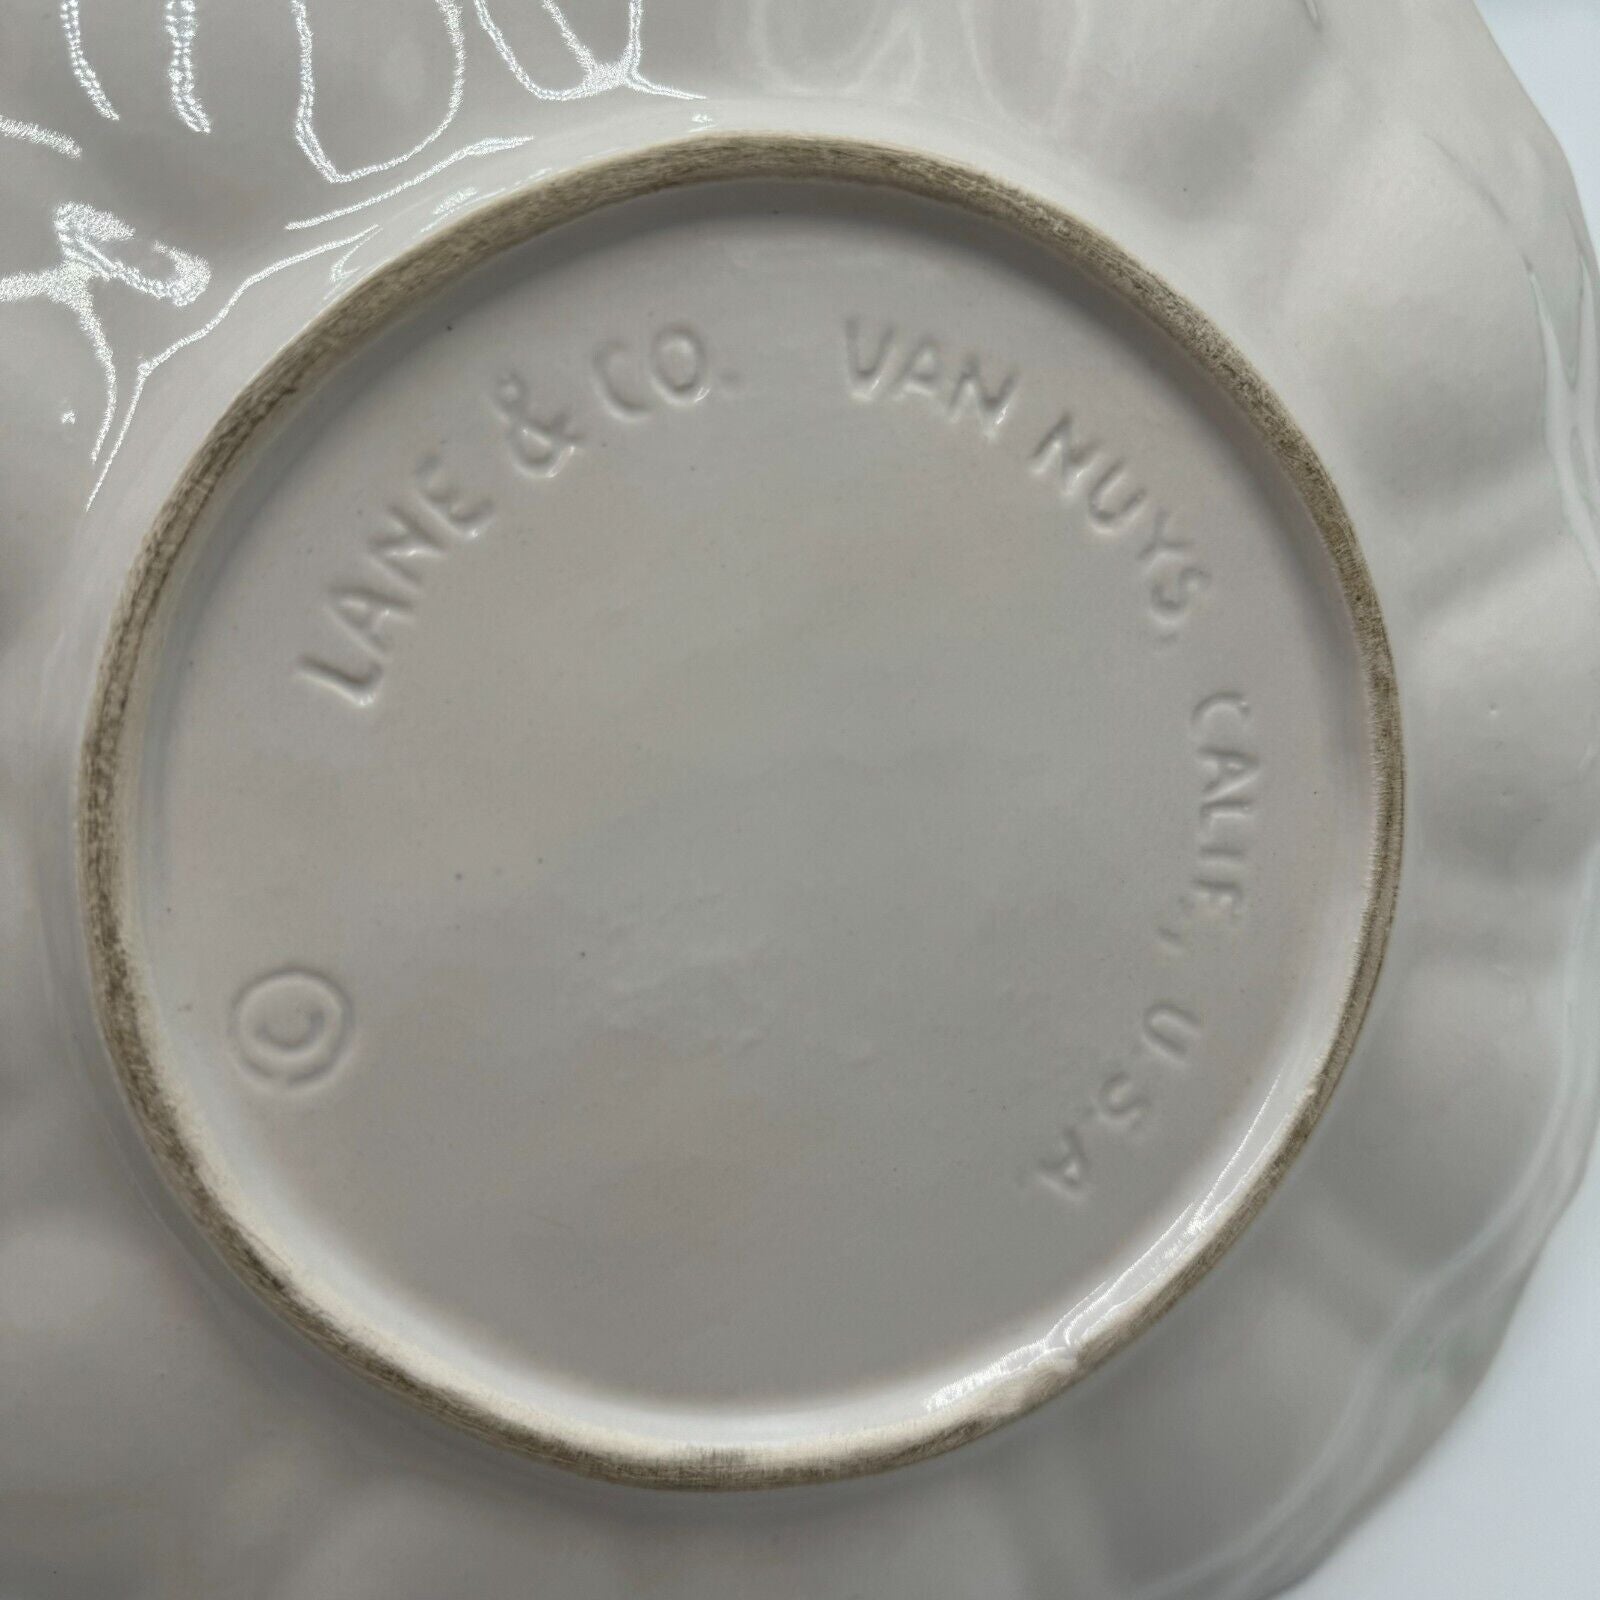 Lane & Co White Floral Ceramic Serving Plate Platter Tray 11.5” Vintage